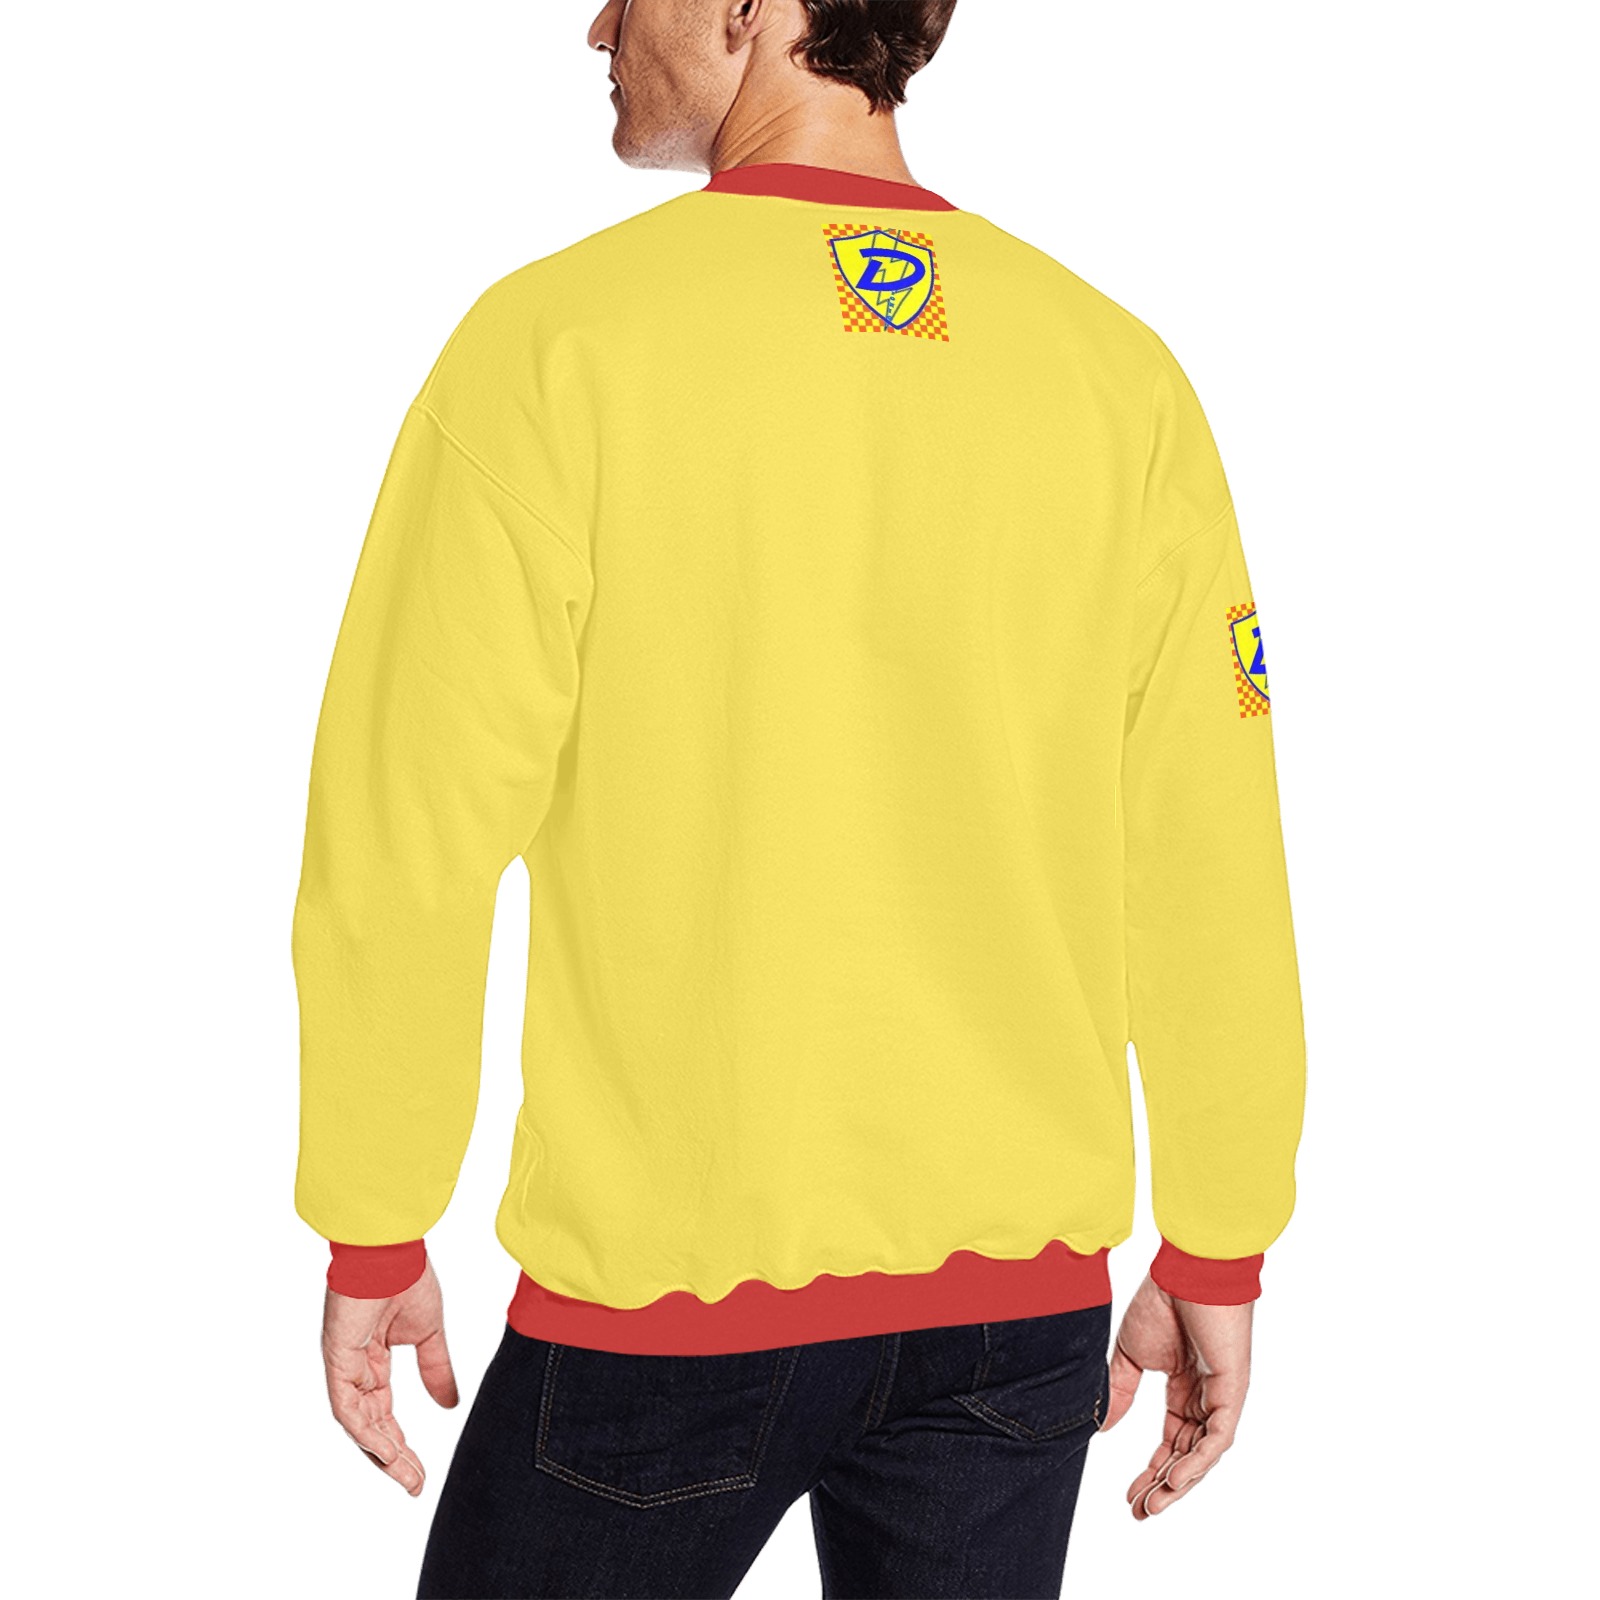 Dionio Clothing - Sweatshirt ( Yellow ,Red & Blue Shield Logo) Men's Oversized Fleece Crew Sweatshirt (Model H18)